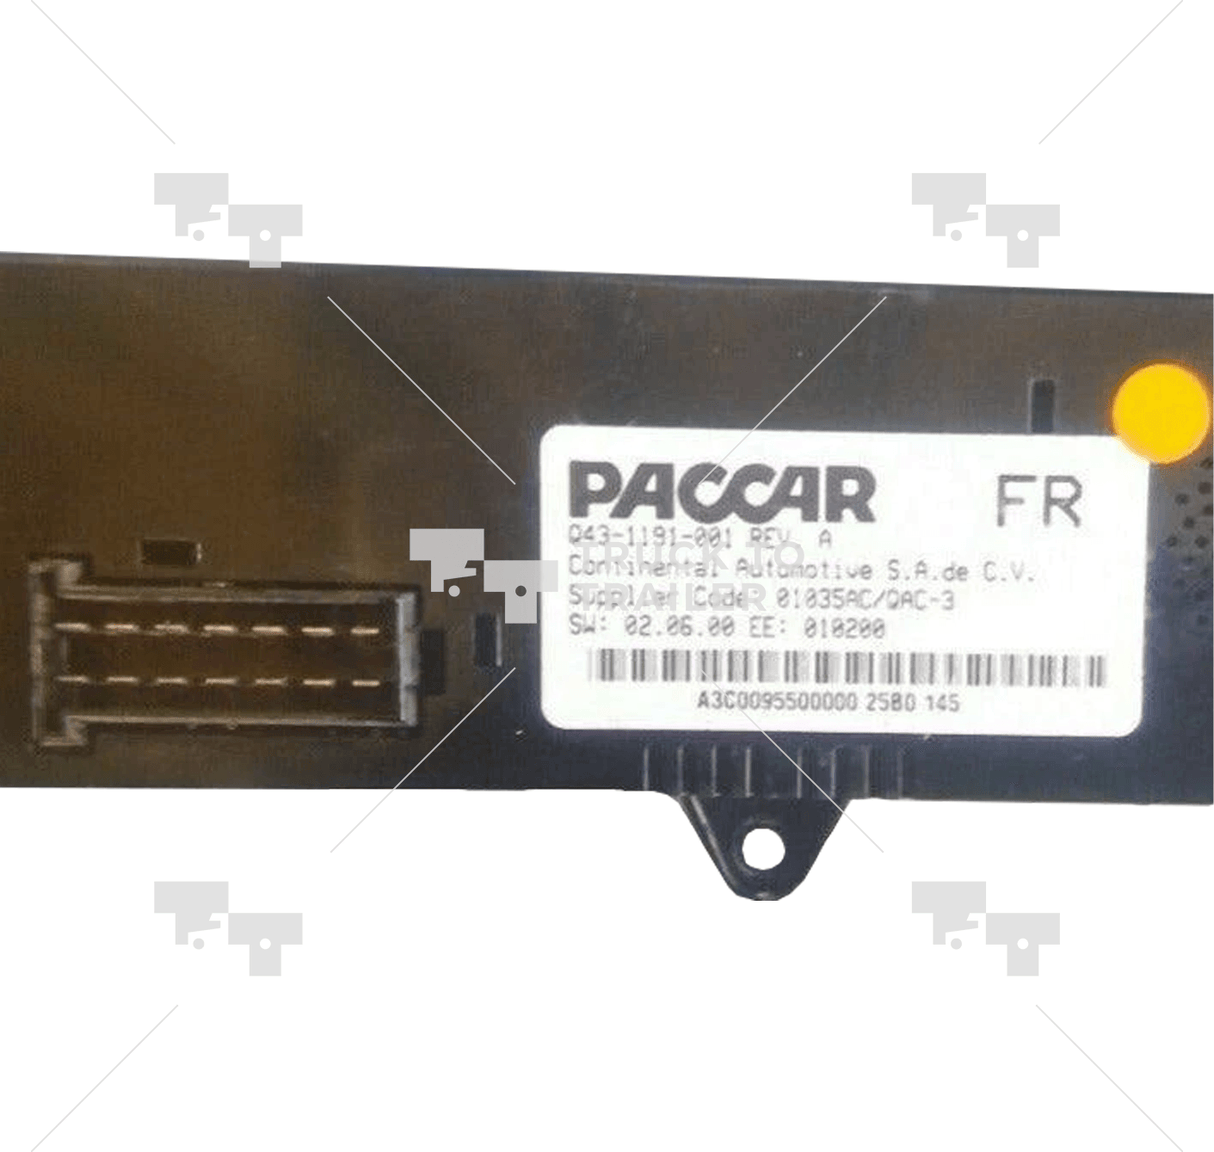 Q43-1191-001 Oem Paccar® Gauge -Display Driver Warning Information - Truck To Trailer